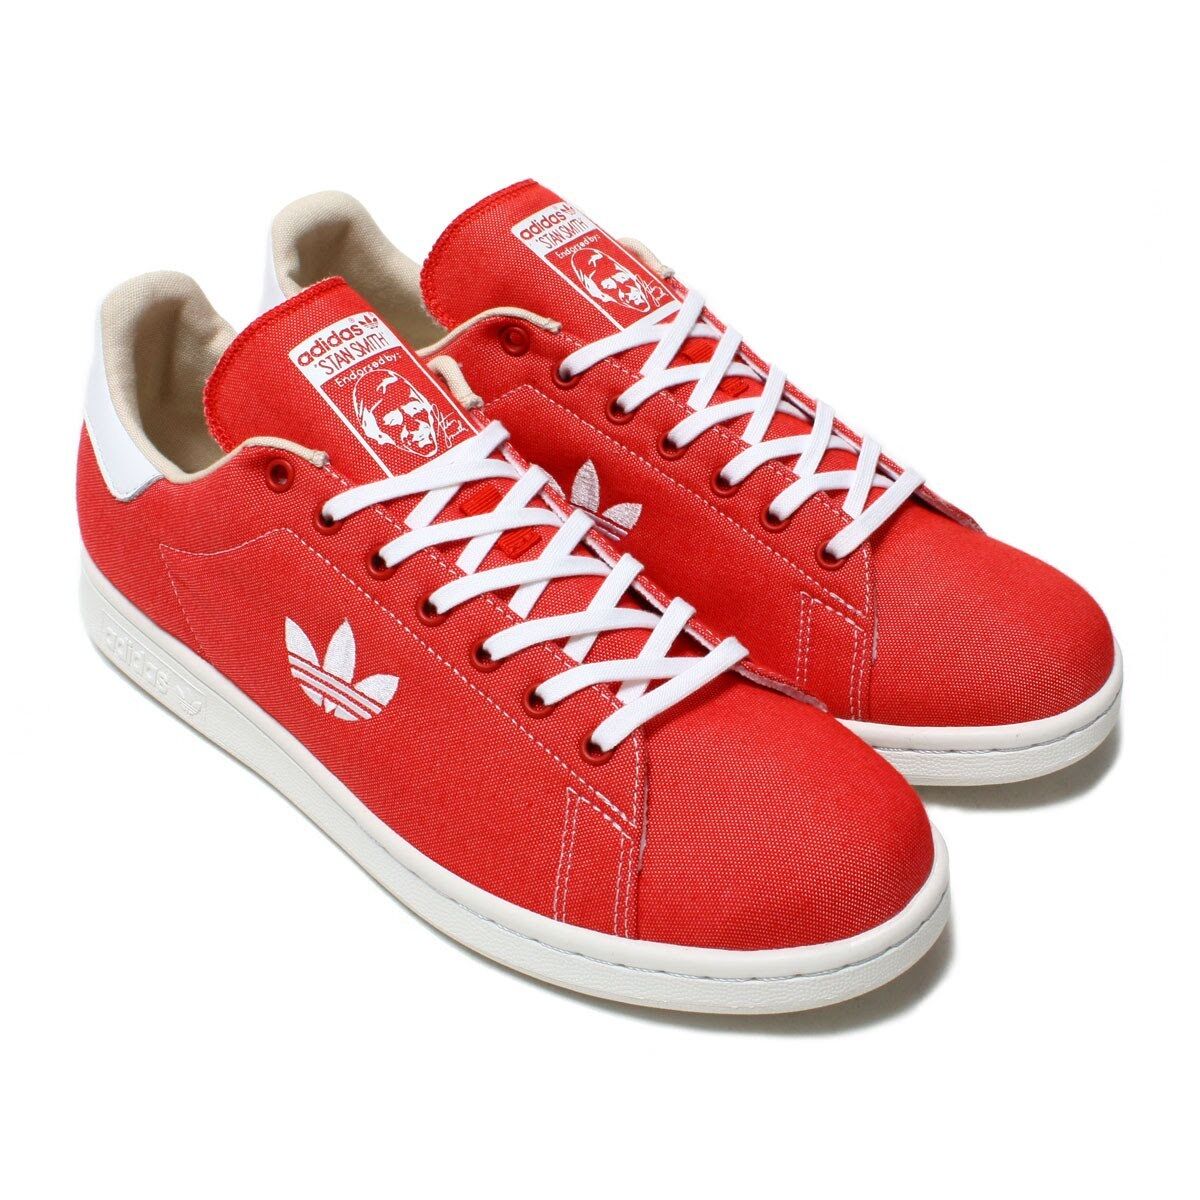 Easy tsunami manual Adidas Originals Stan Smith Mens Shoes Canvas Red B37894 Size 10 NWT | eBay